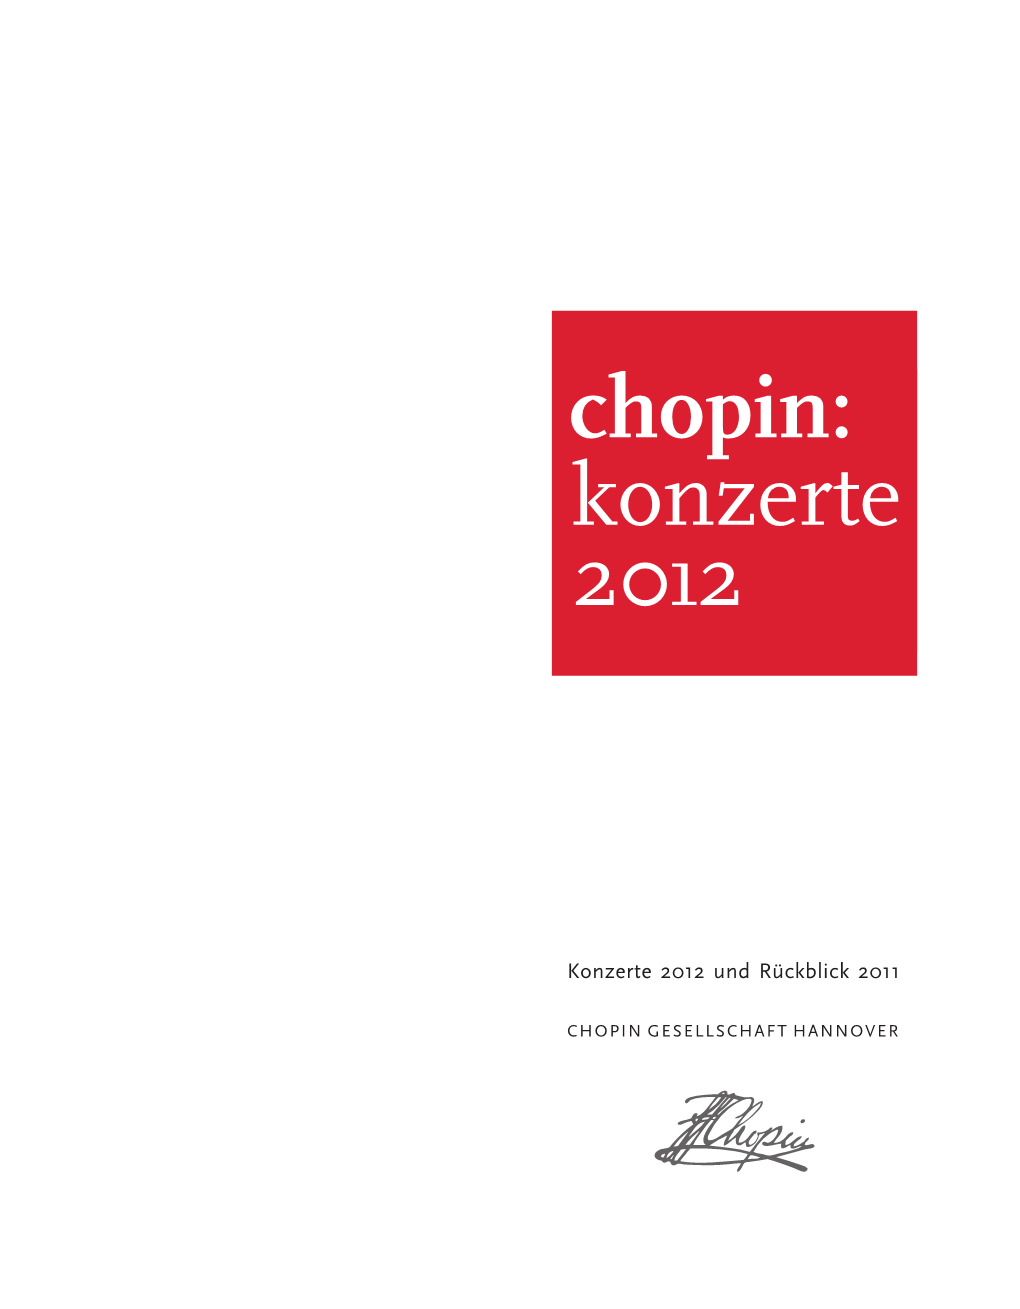 Chopin-Gesellschaft Hannover Ev